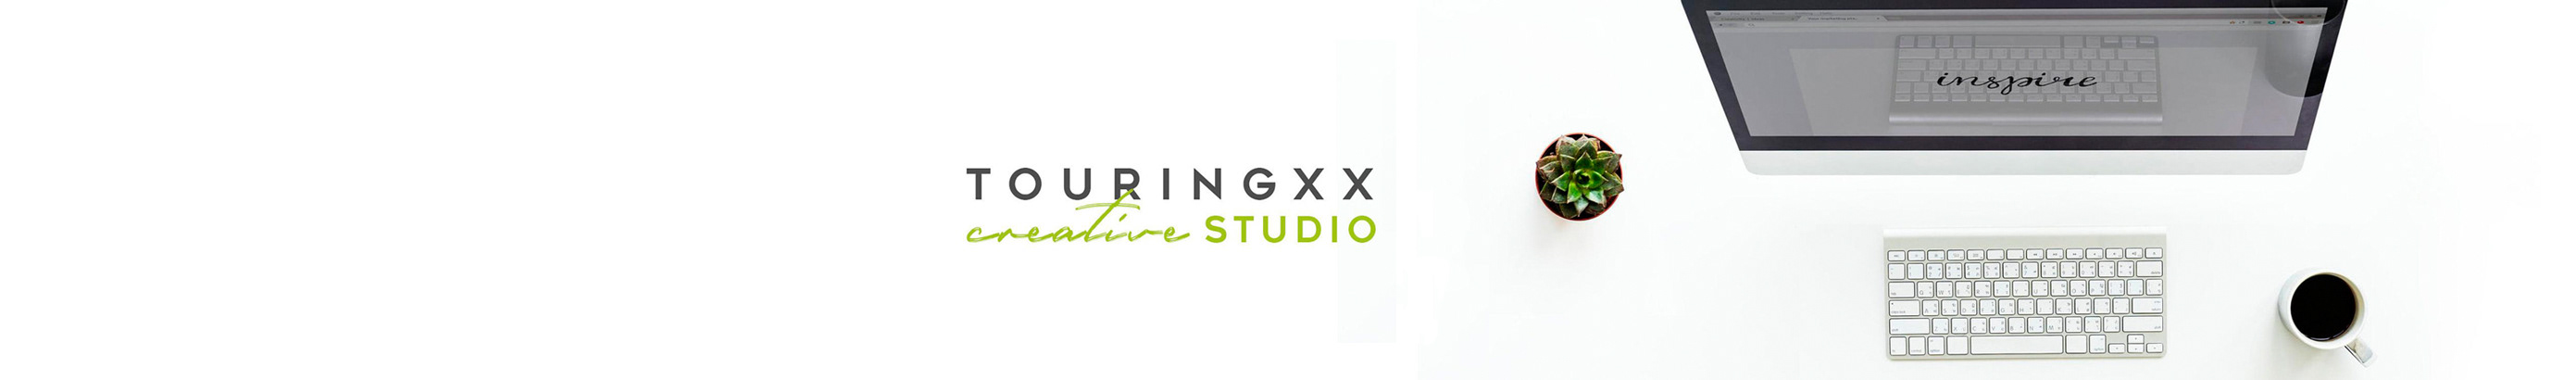 Touringxx Creative Studio 님의 프로필 배너